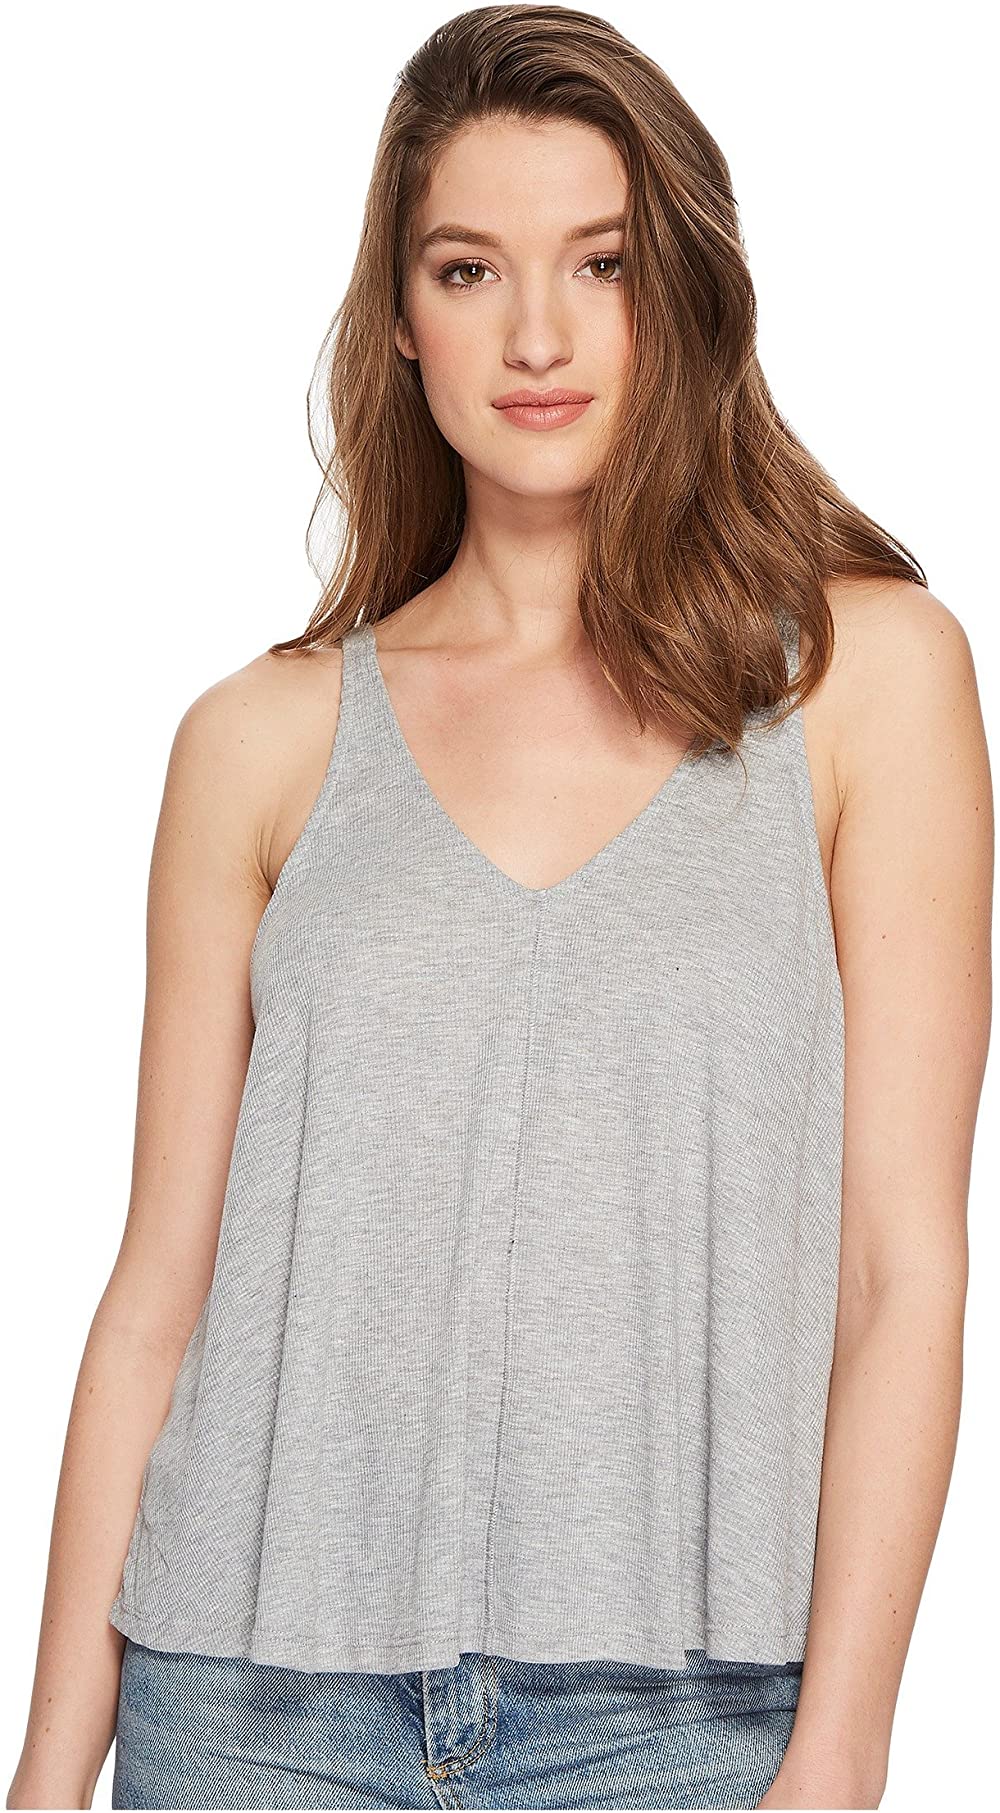 New Ladies Women Girls Soft Cotton Top Tank T-shirt Fine Strap S M L XL 